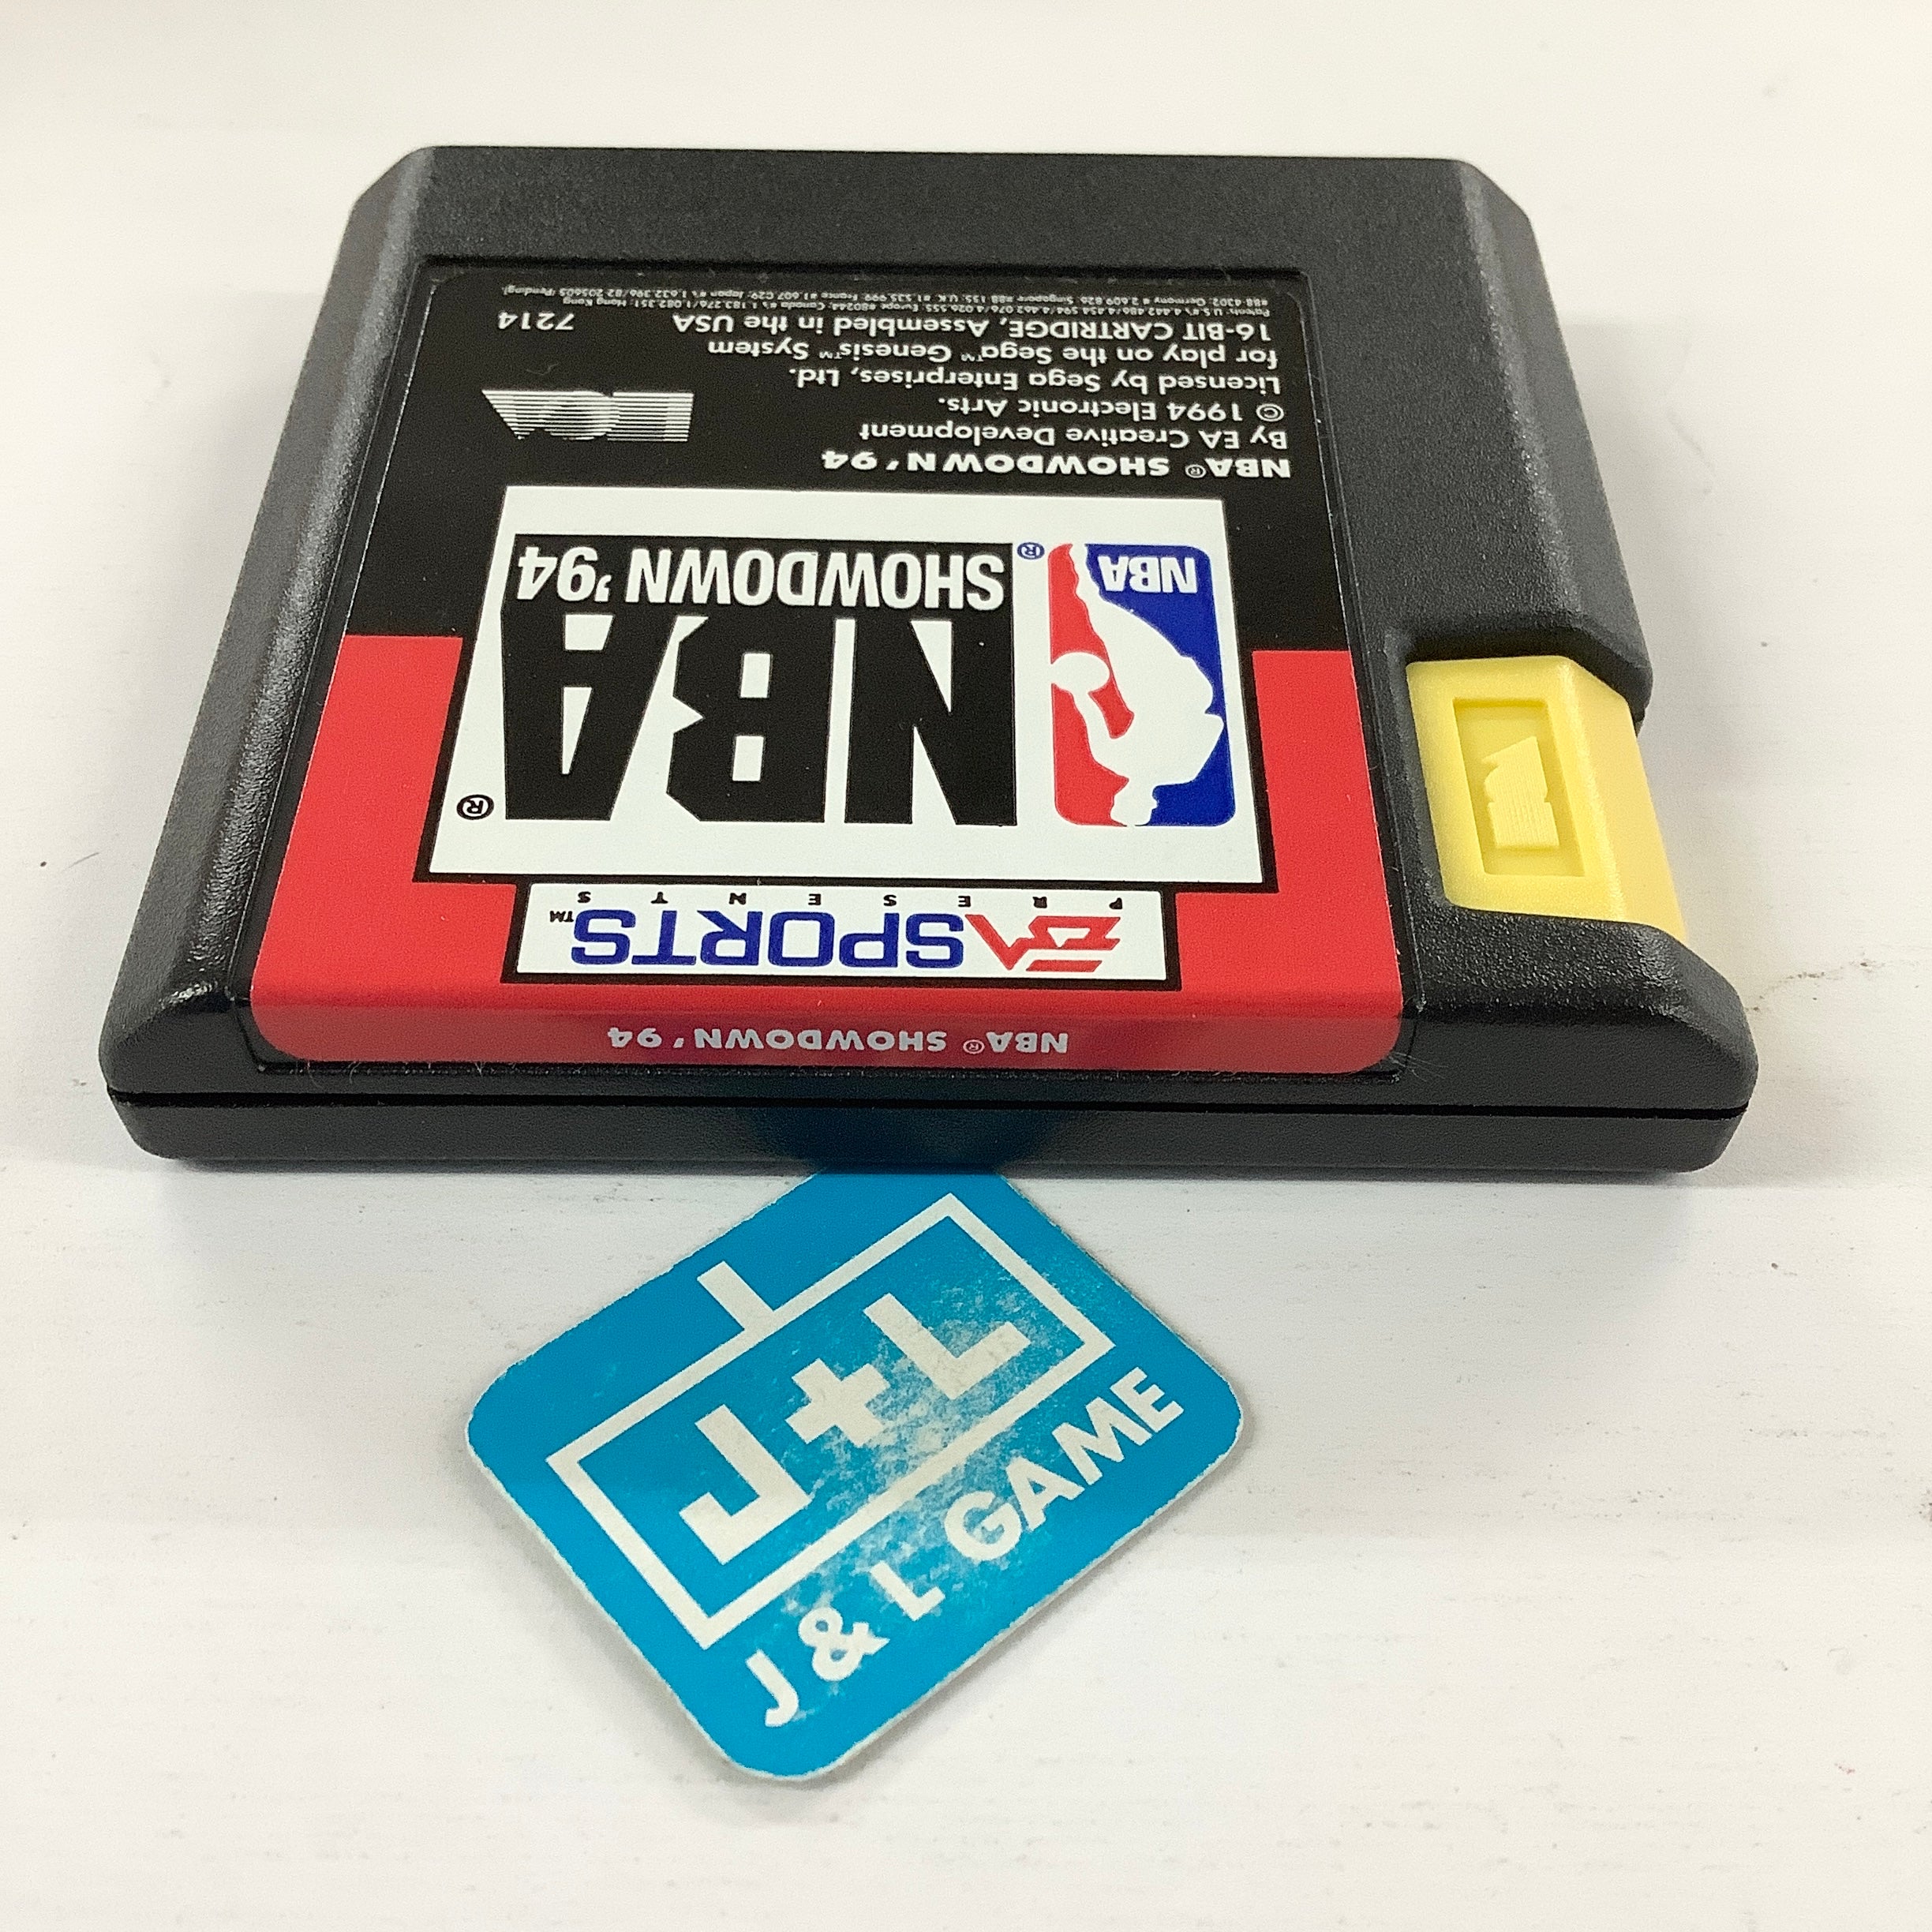 NBA Showdown '94 - (SG) SEGA Genesis [Pre-Owned] Video Games Electronic Arts   